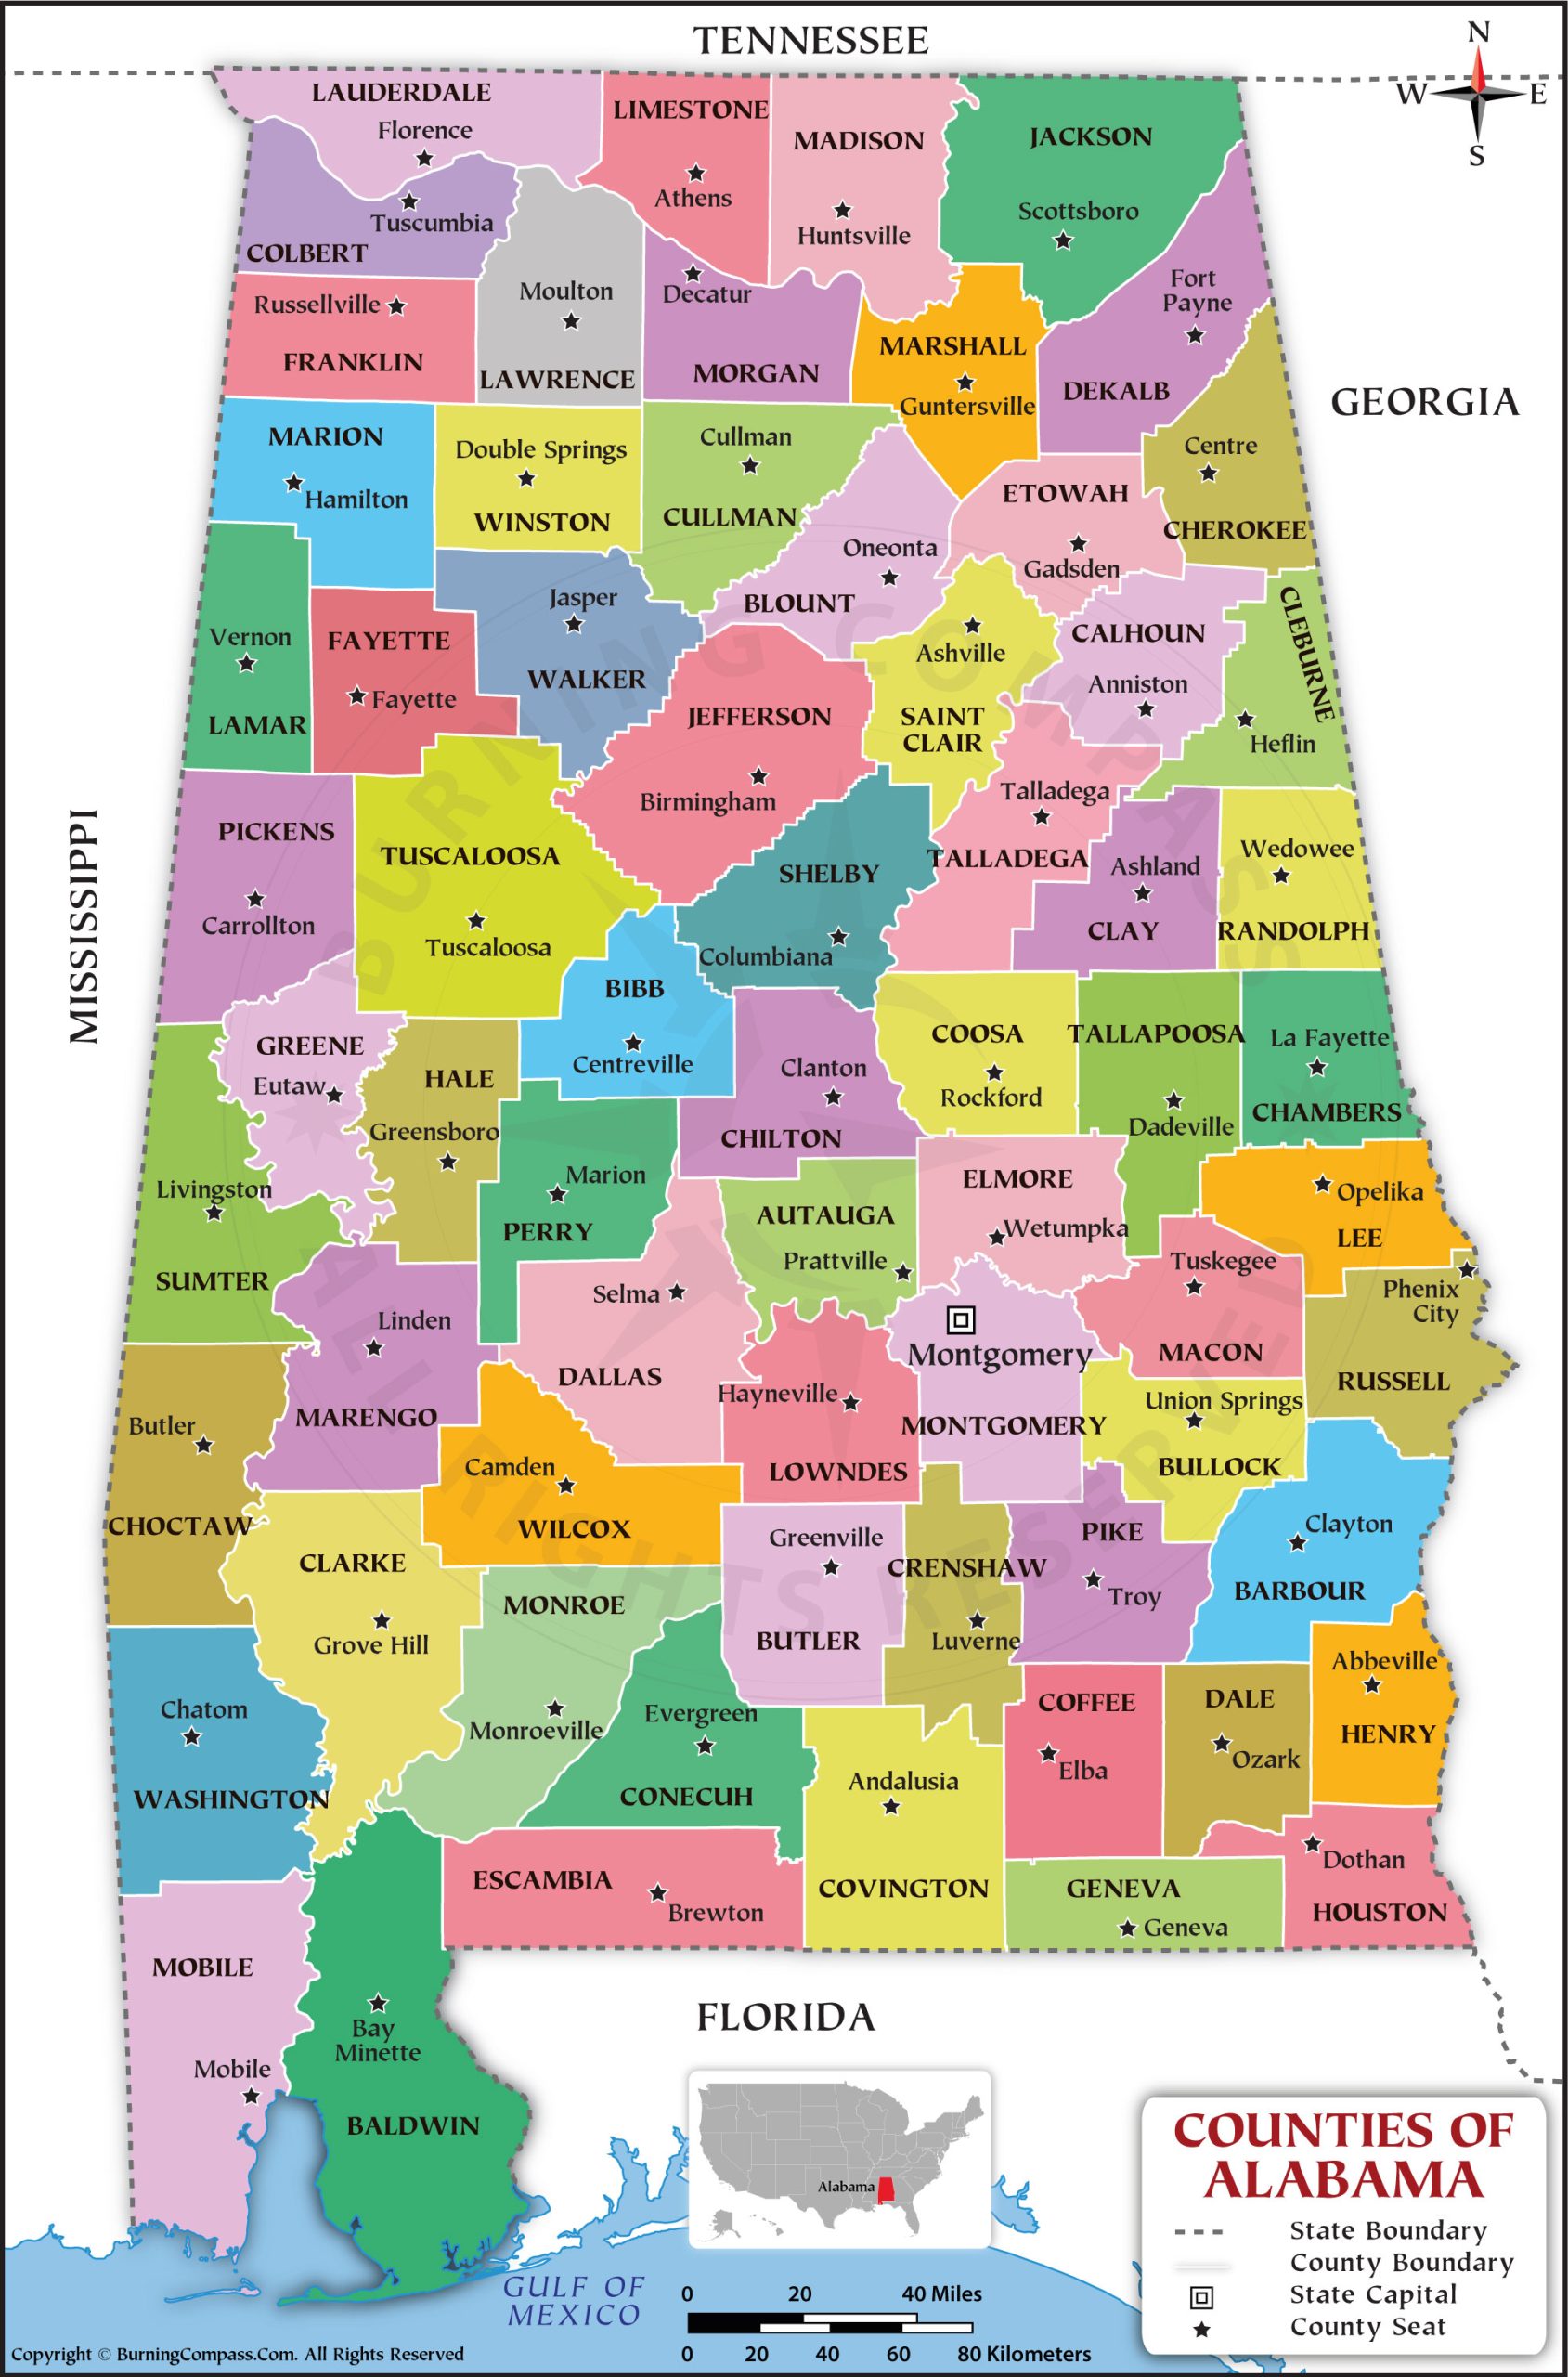 Buy Alabama County Map Online, Purchase Alabama County Map